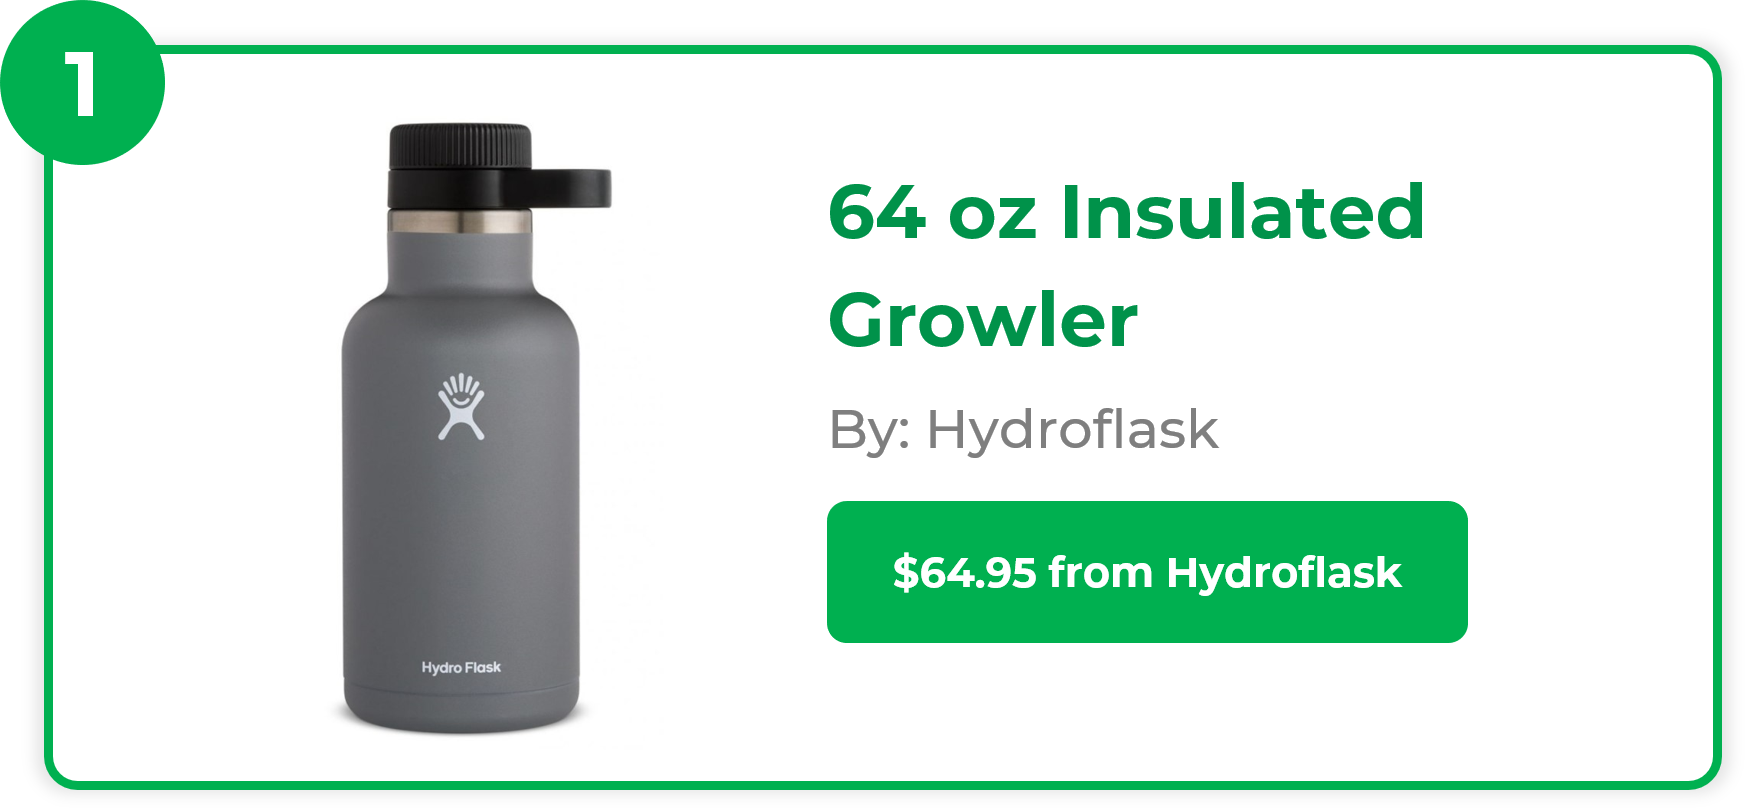 64 oz Insulated Growler - Hydroflask